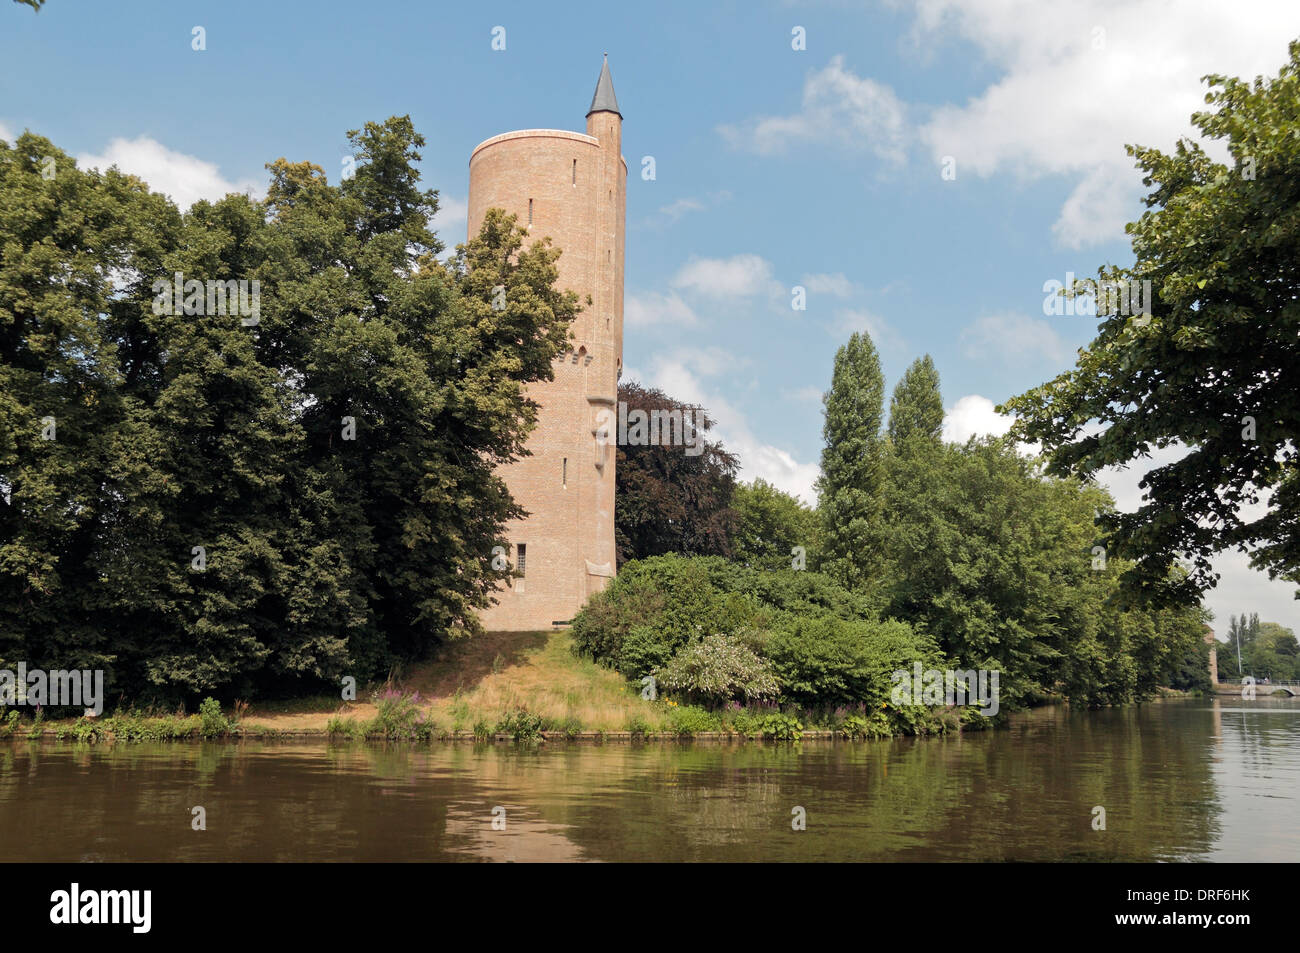 Parco Minnewater Torre della Polvere sul canale Bruges-Ghent, Bruges (Brugge), Fiandre Occidentali, Belgio. Foto Stock